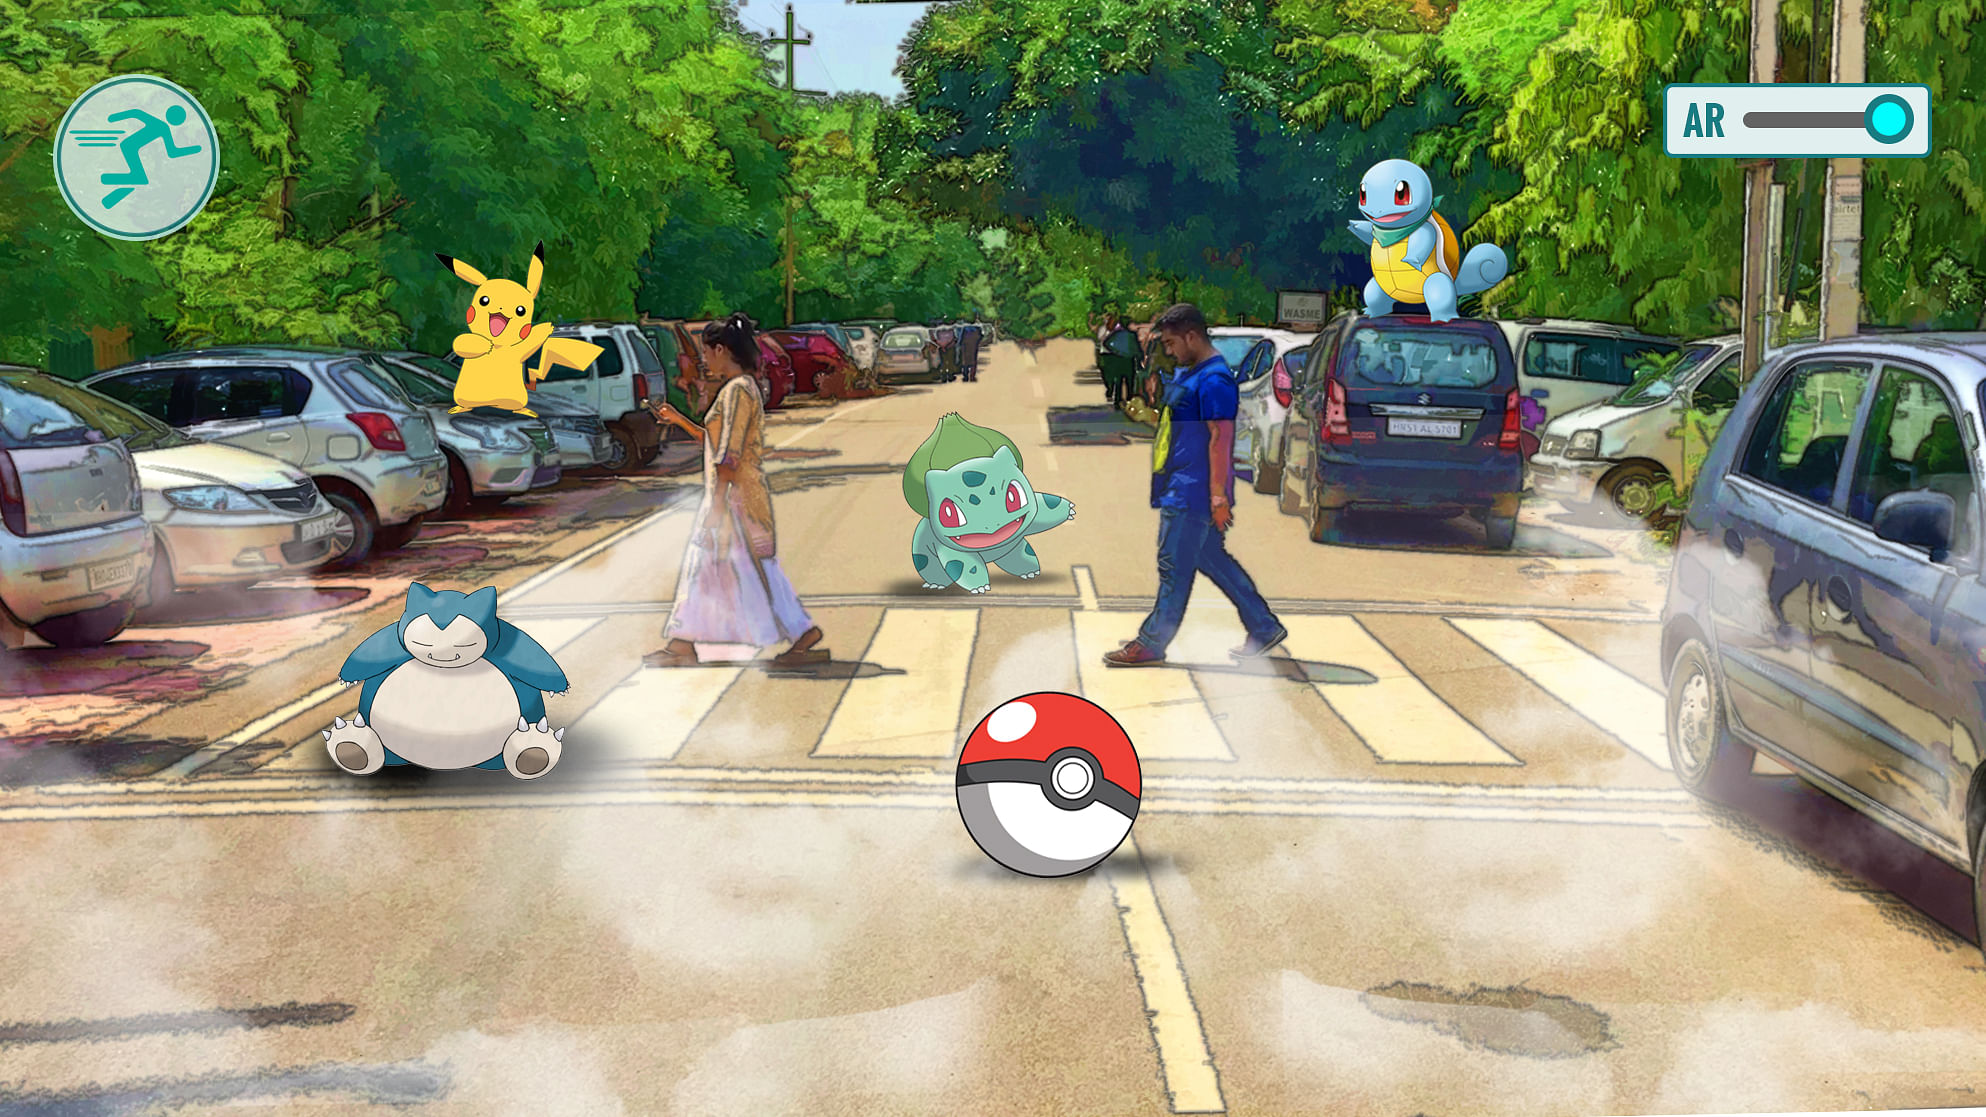 Pokémons are everywhere, go catch ‘em all. (Photo : <b>The Quint</b>)